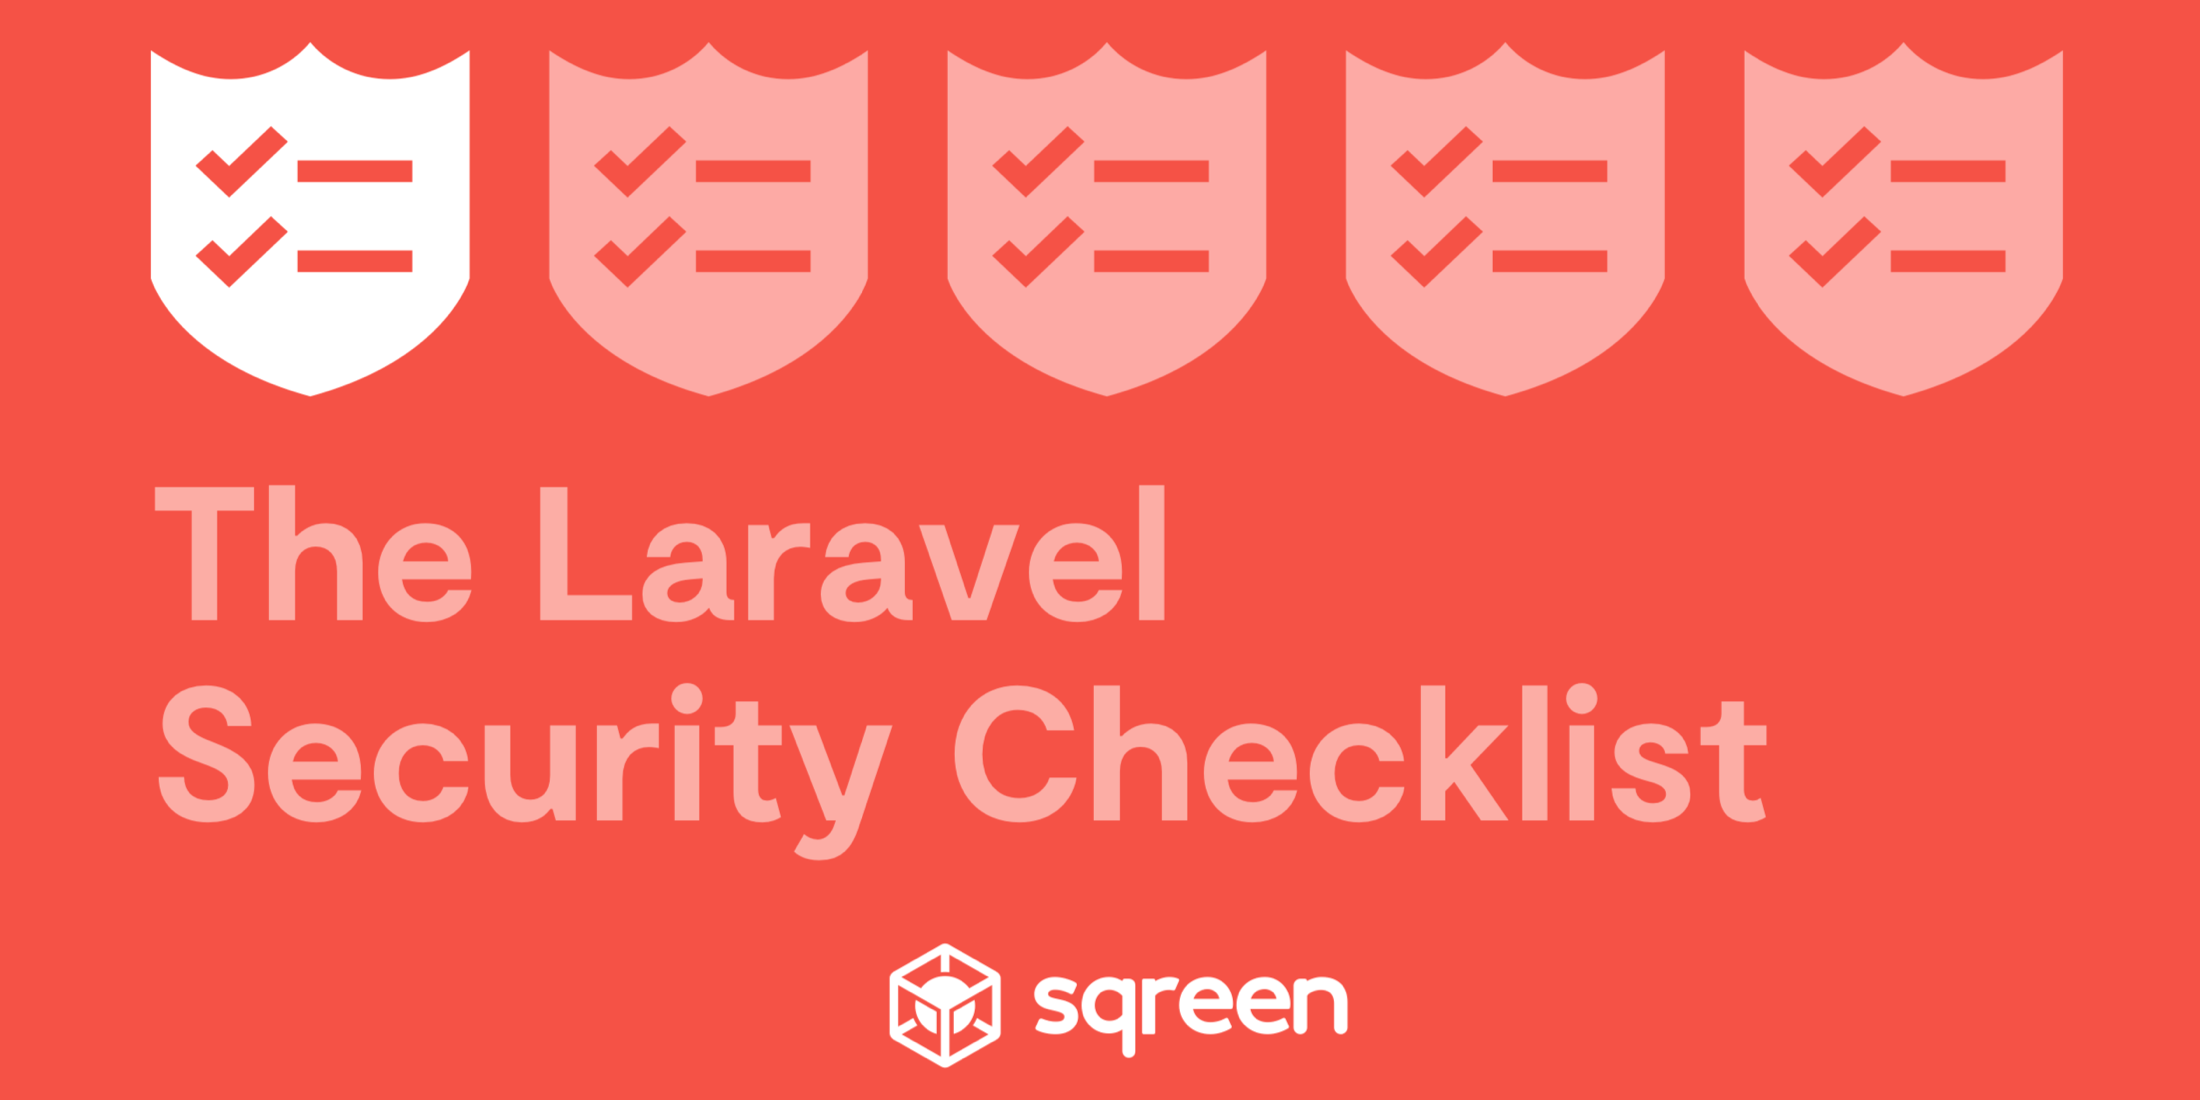 The Laravel Security Checklist (Sponsor) image